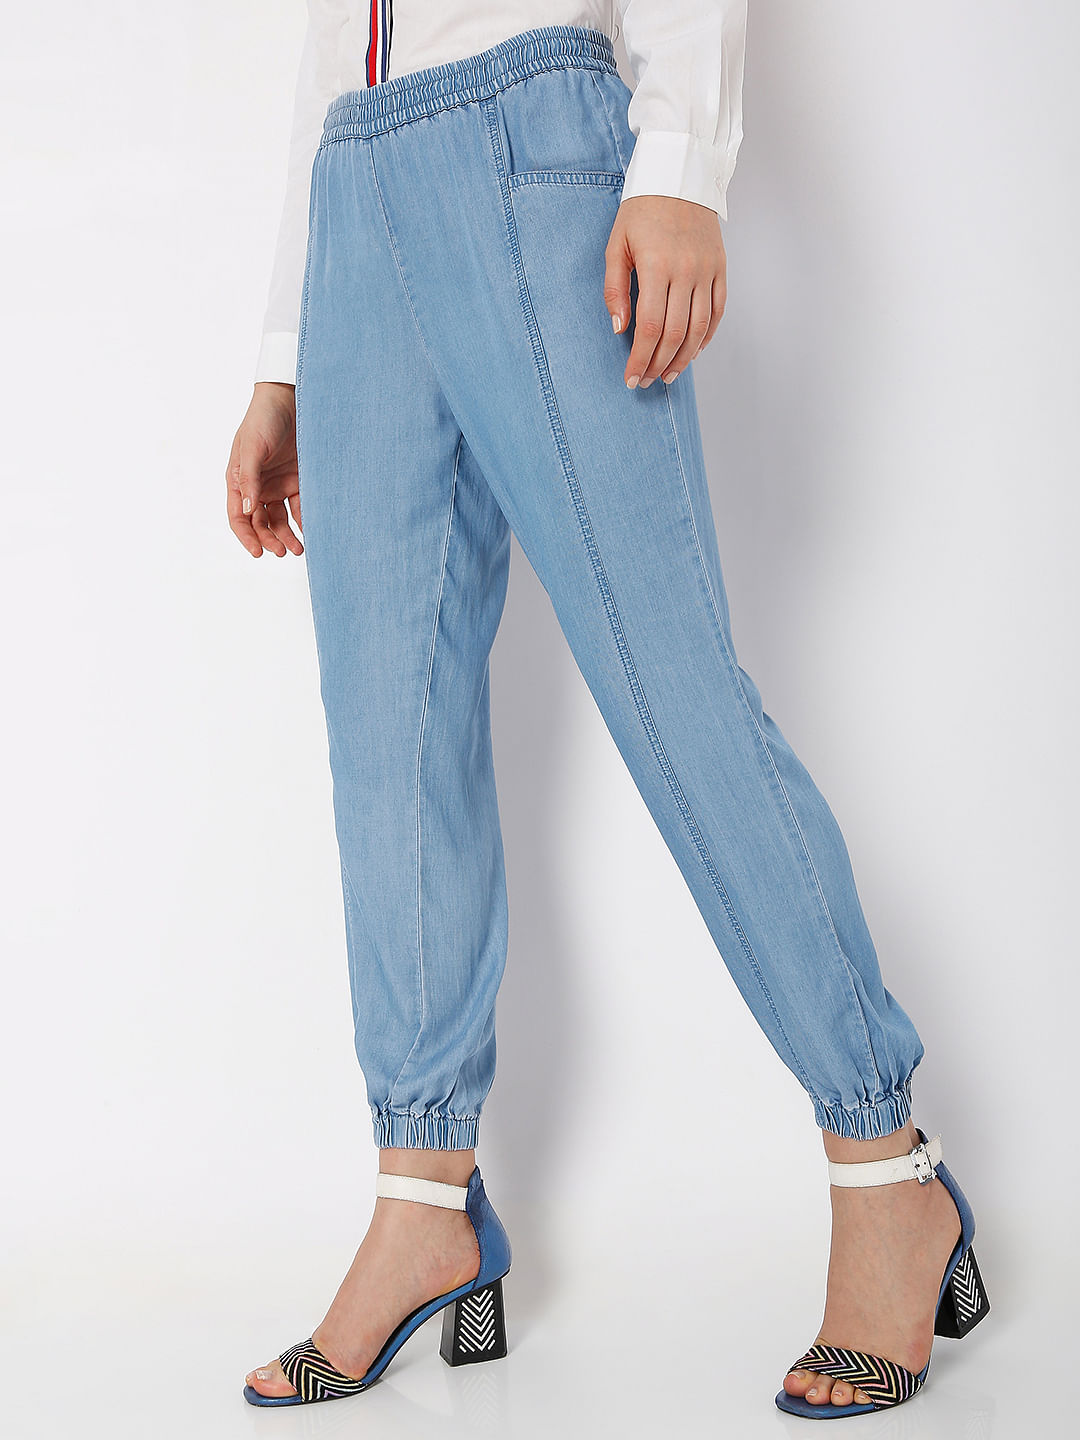 Katie High Rise Crossover Jeans - Distressed Vintage Indigo Wash |  Universal Standard